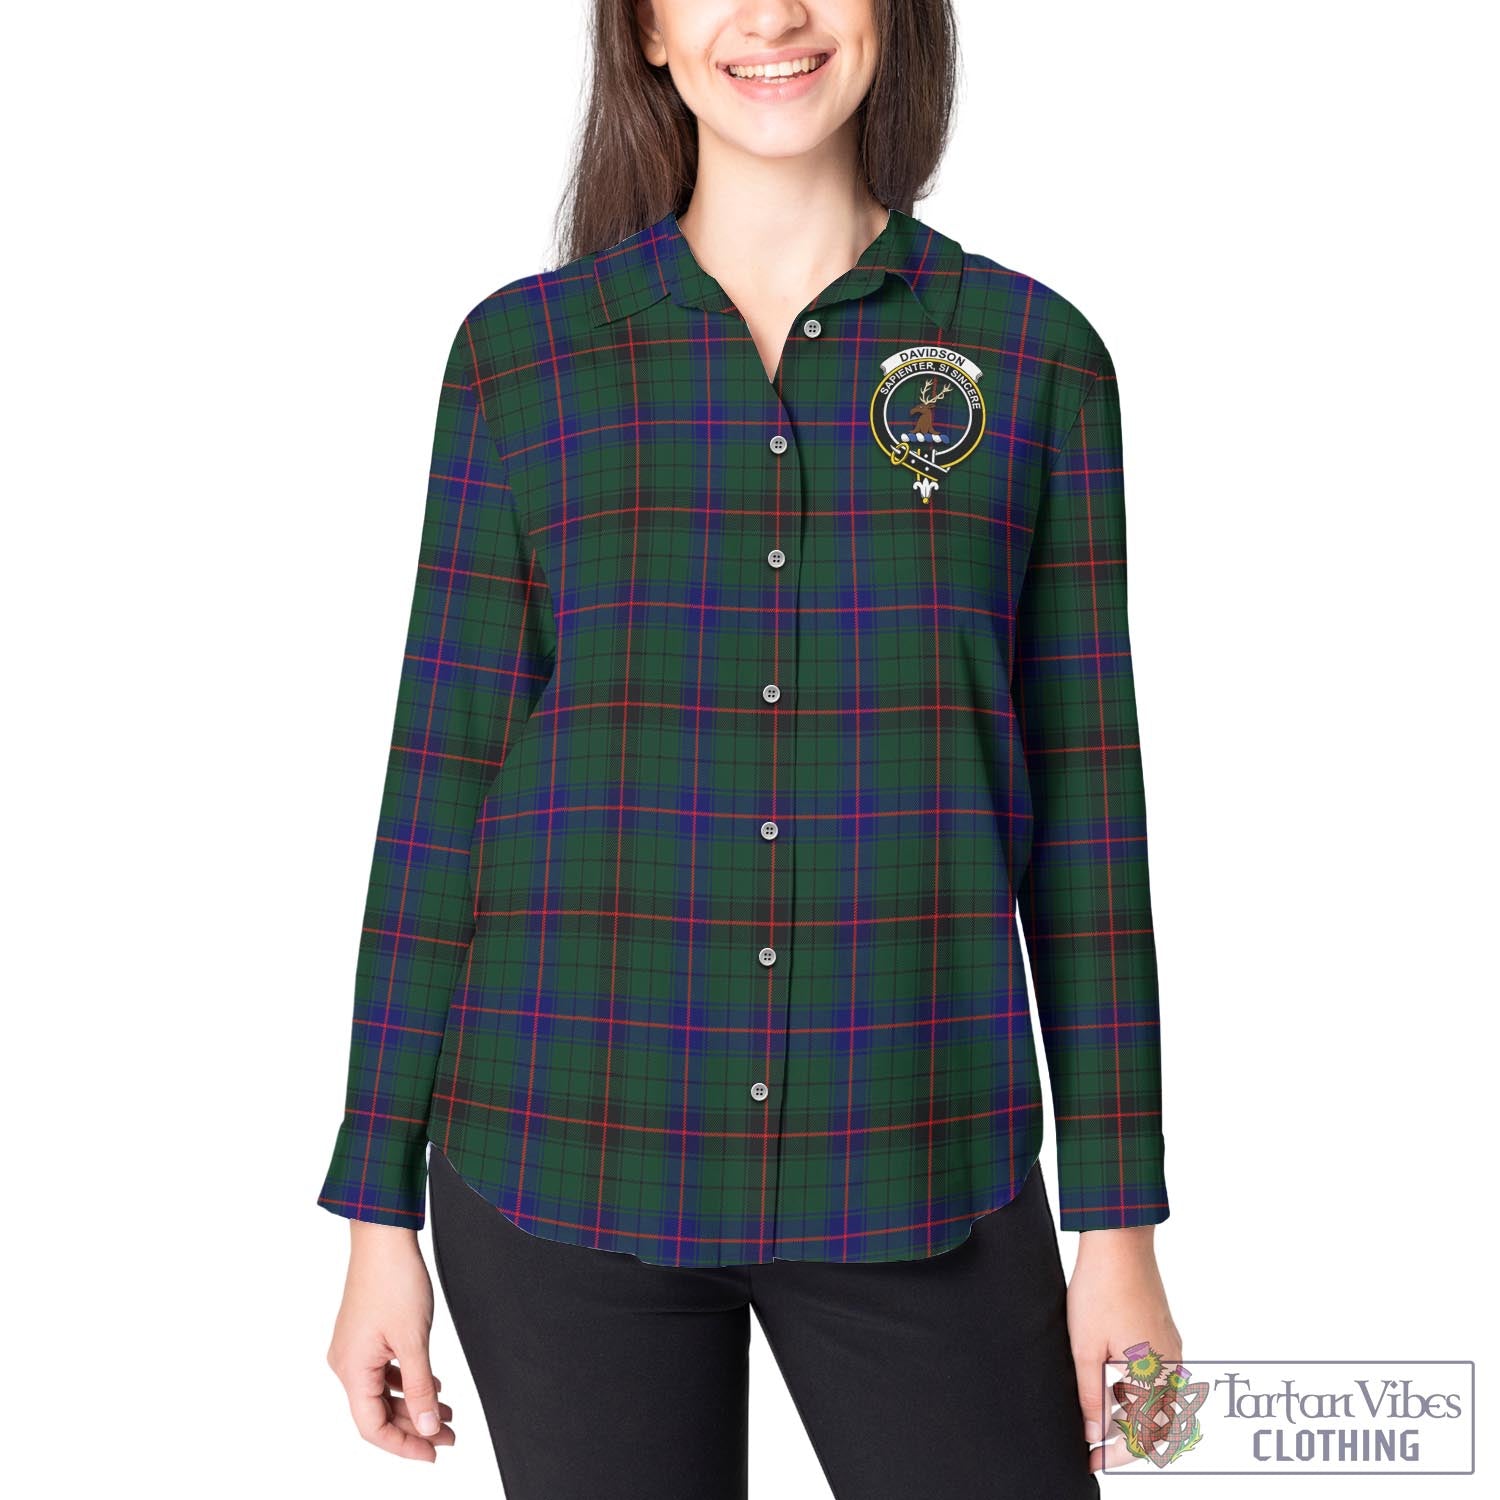 Tartan Vibes Clothing Davidson Modern Tartan Womens Casual Shirt with Family Crest